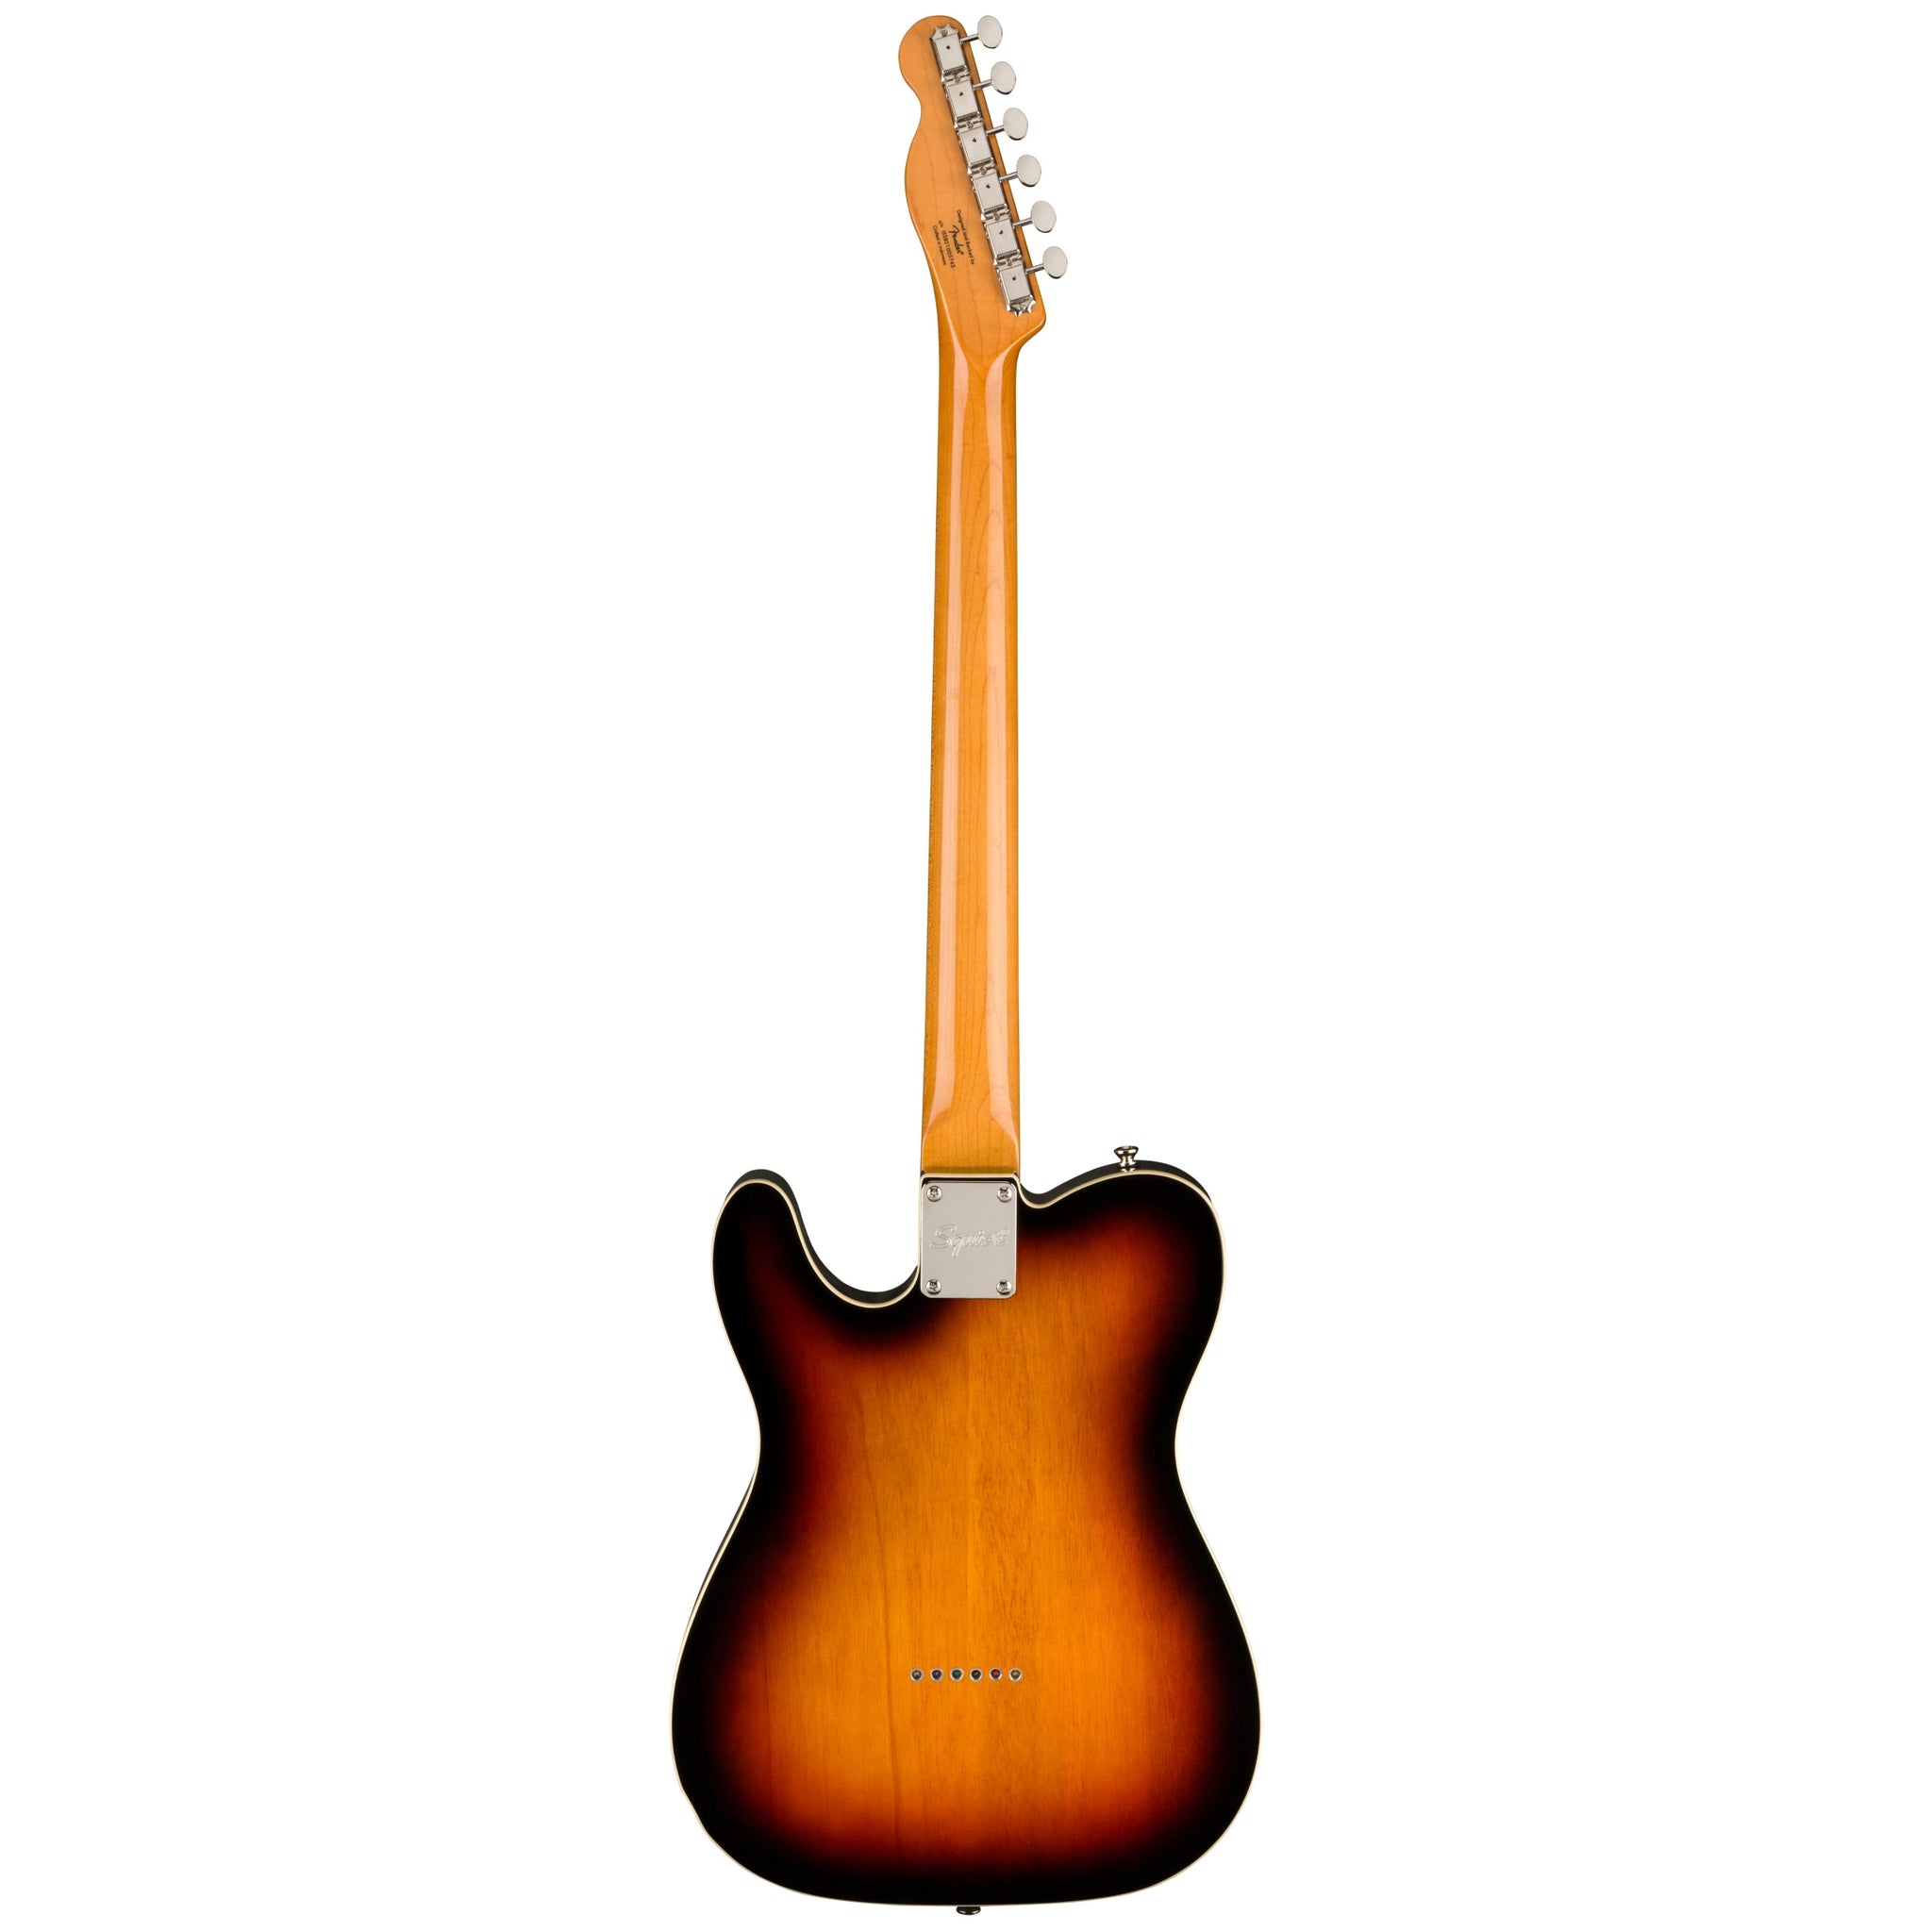 Fender Squire Classic Vibe Baritone Custom Telecaster - 3-Color Sunburst